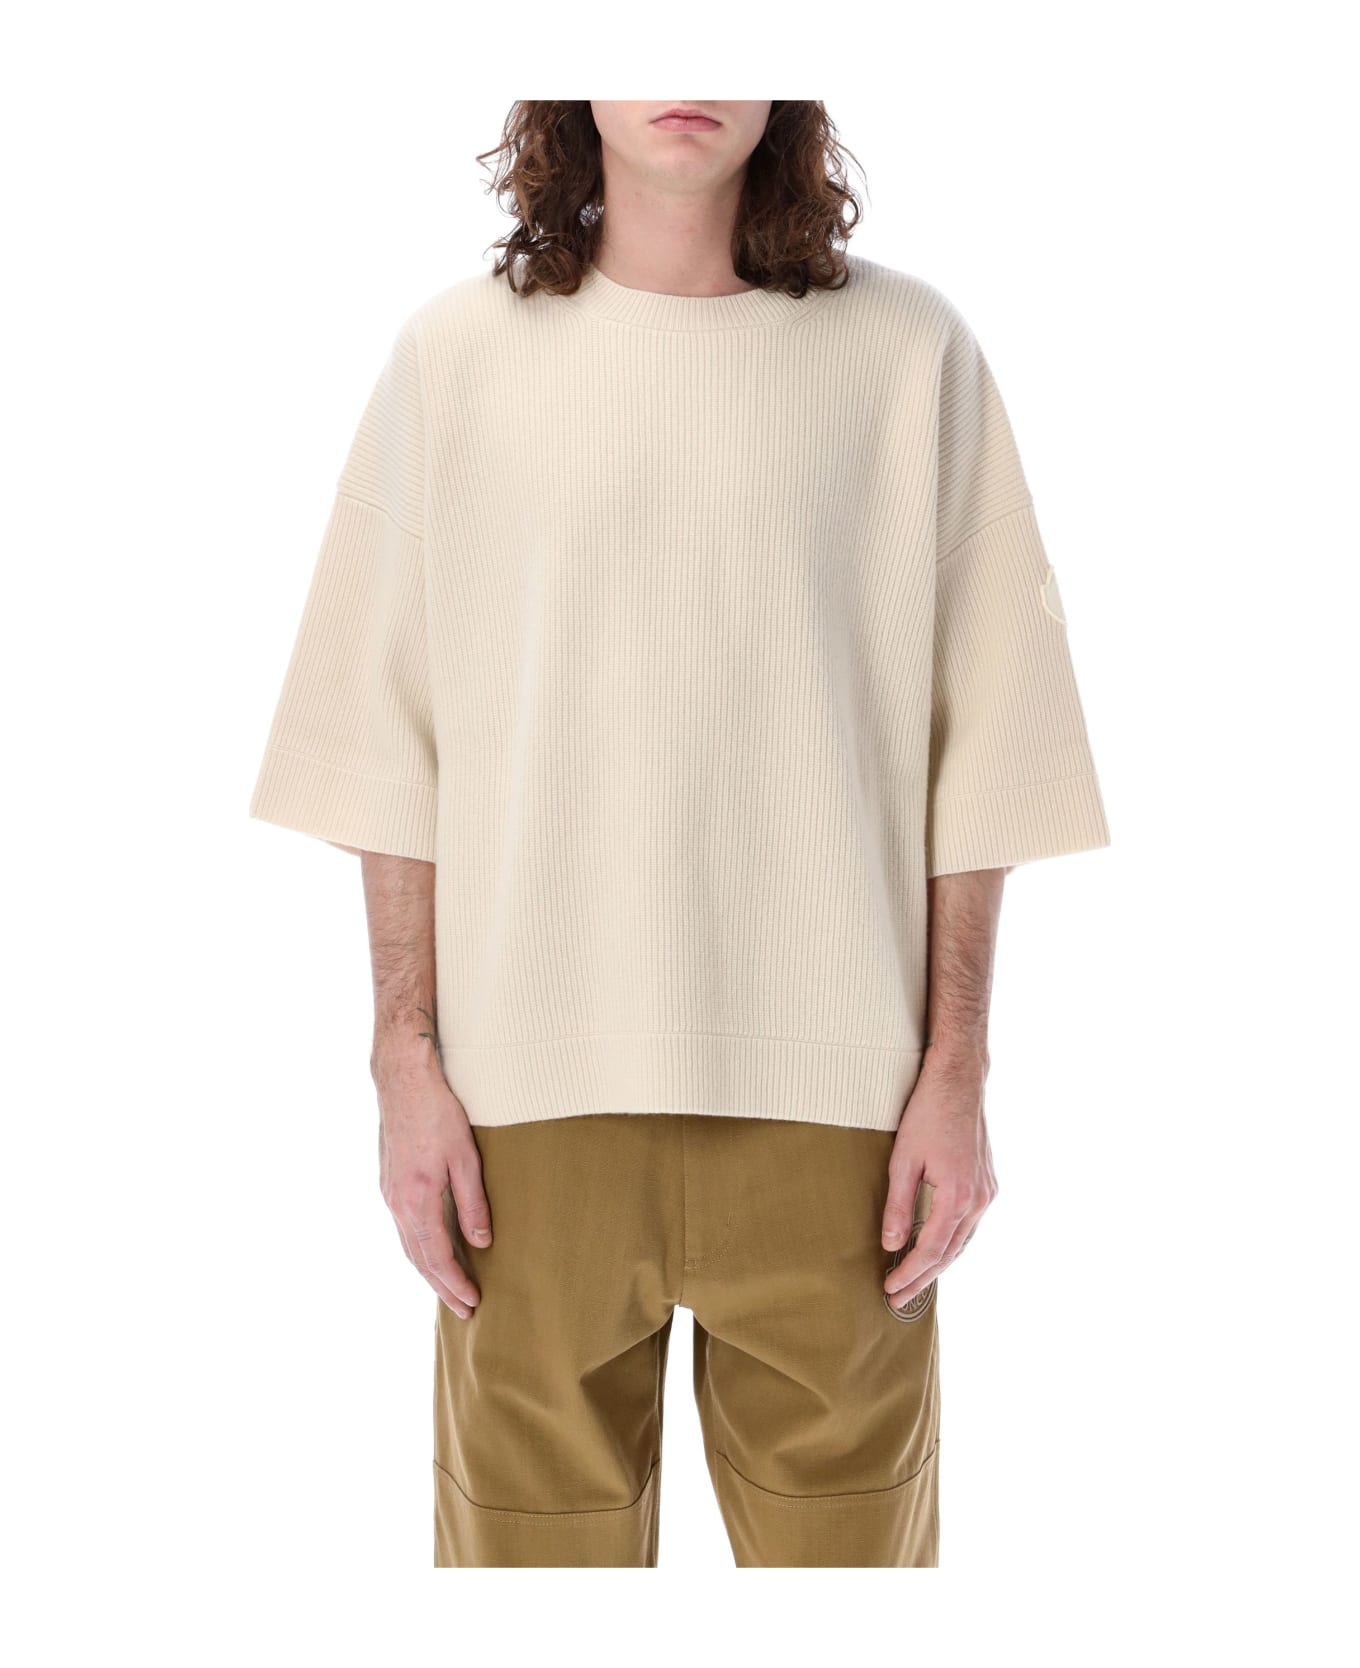 Moncler Genius Short Sleeves Sweater - NATURAL